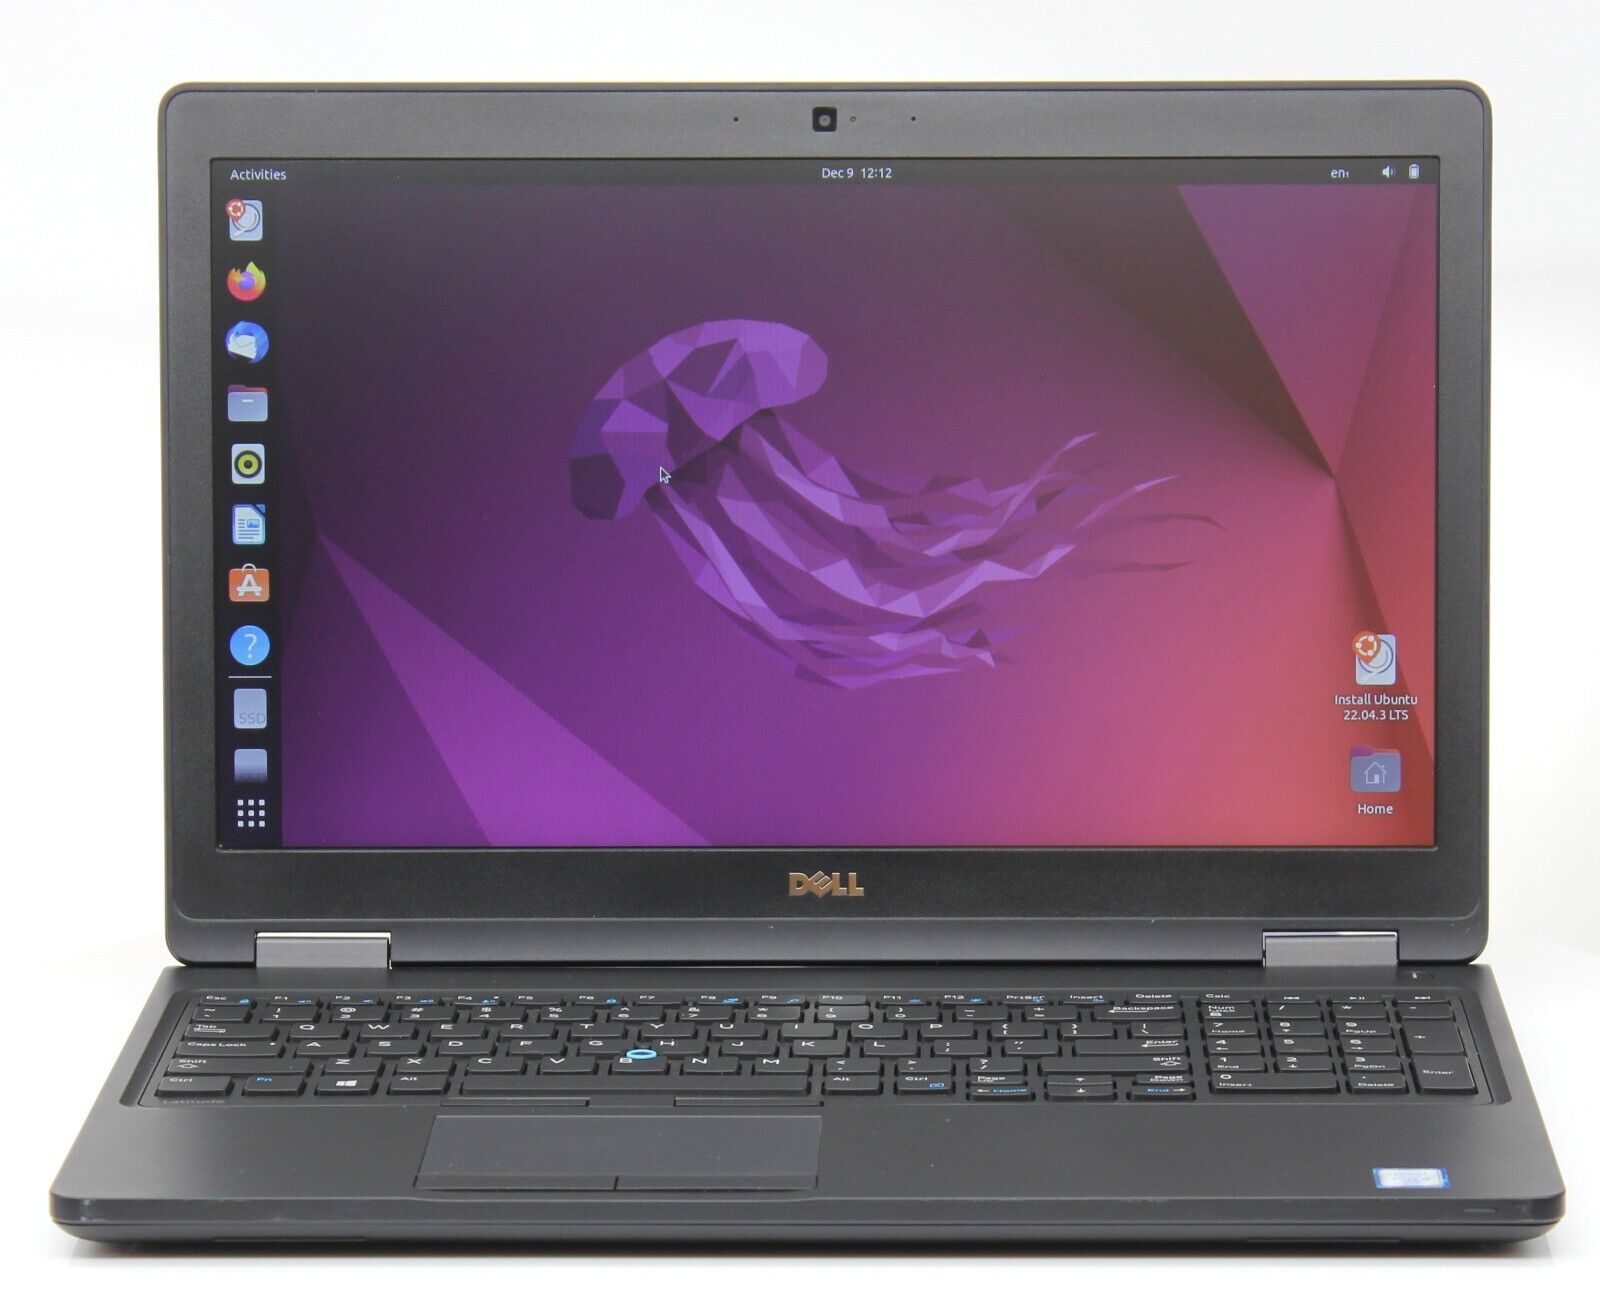 Linux Ubuntu 22.04 Laptop Computer, 2.50GHz, 500GB SSD, 16GB RAM, WiFi, Dell PC